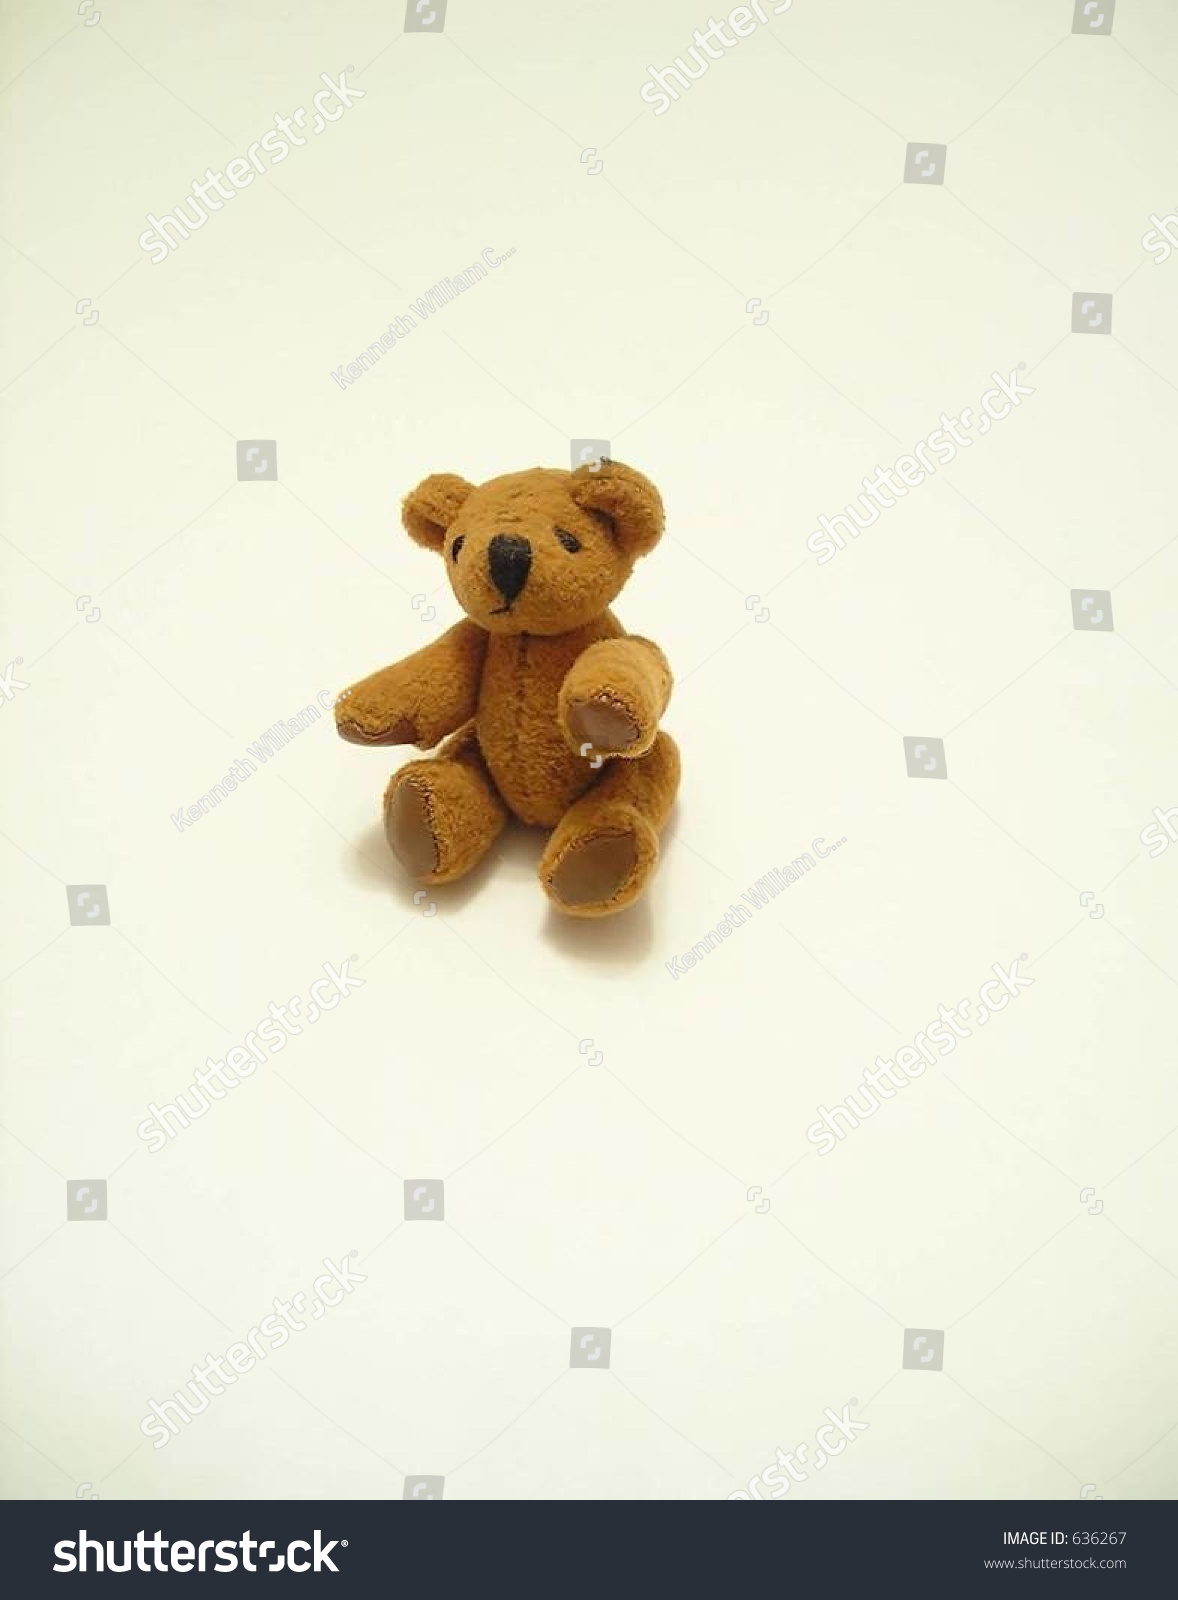 tiny stuffed bear